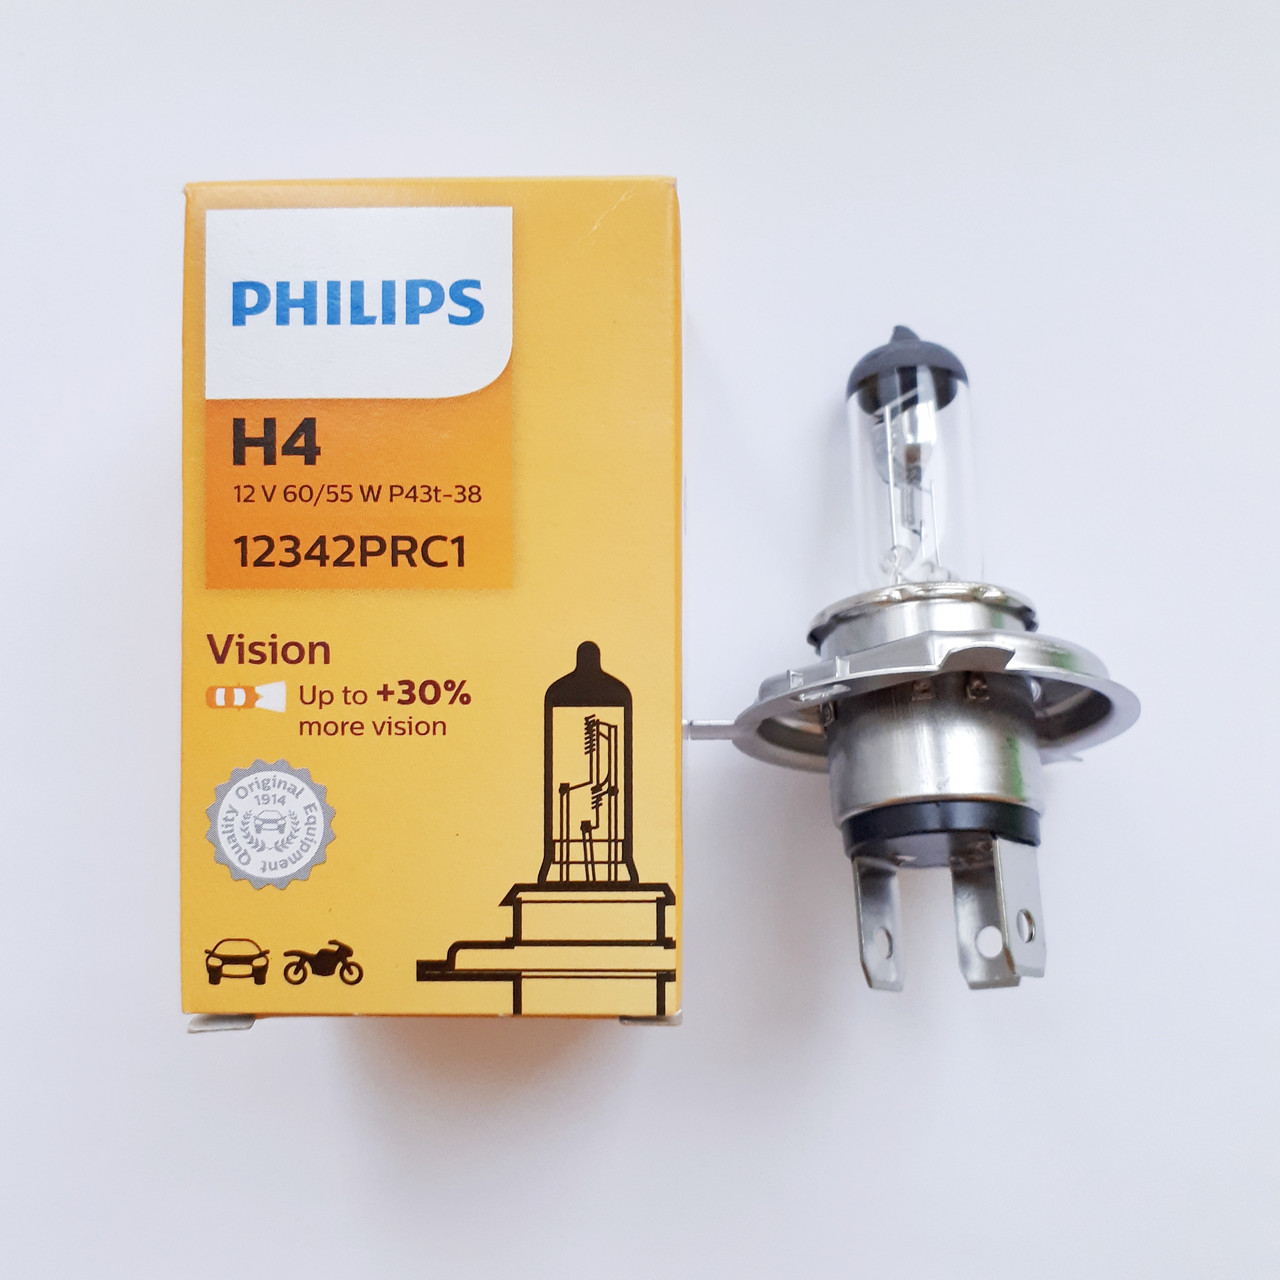 Philips h4 12v 60 55w. Лампа Филипс h4 +30 60/55w. Лампа в фару н4 12v 60/55w Филипс на 130 процентов. Лампа h4 12v 60/55w цена Филипс. Автолампа Philips 12636c1.